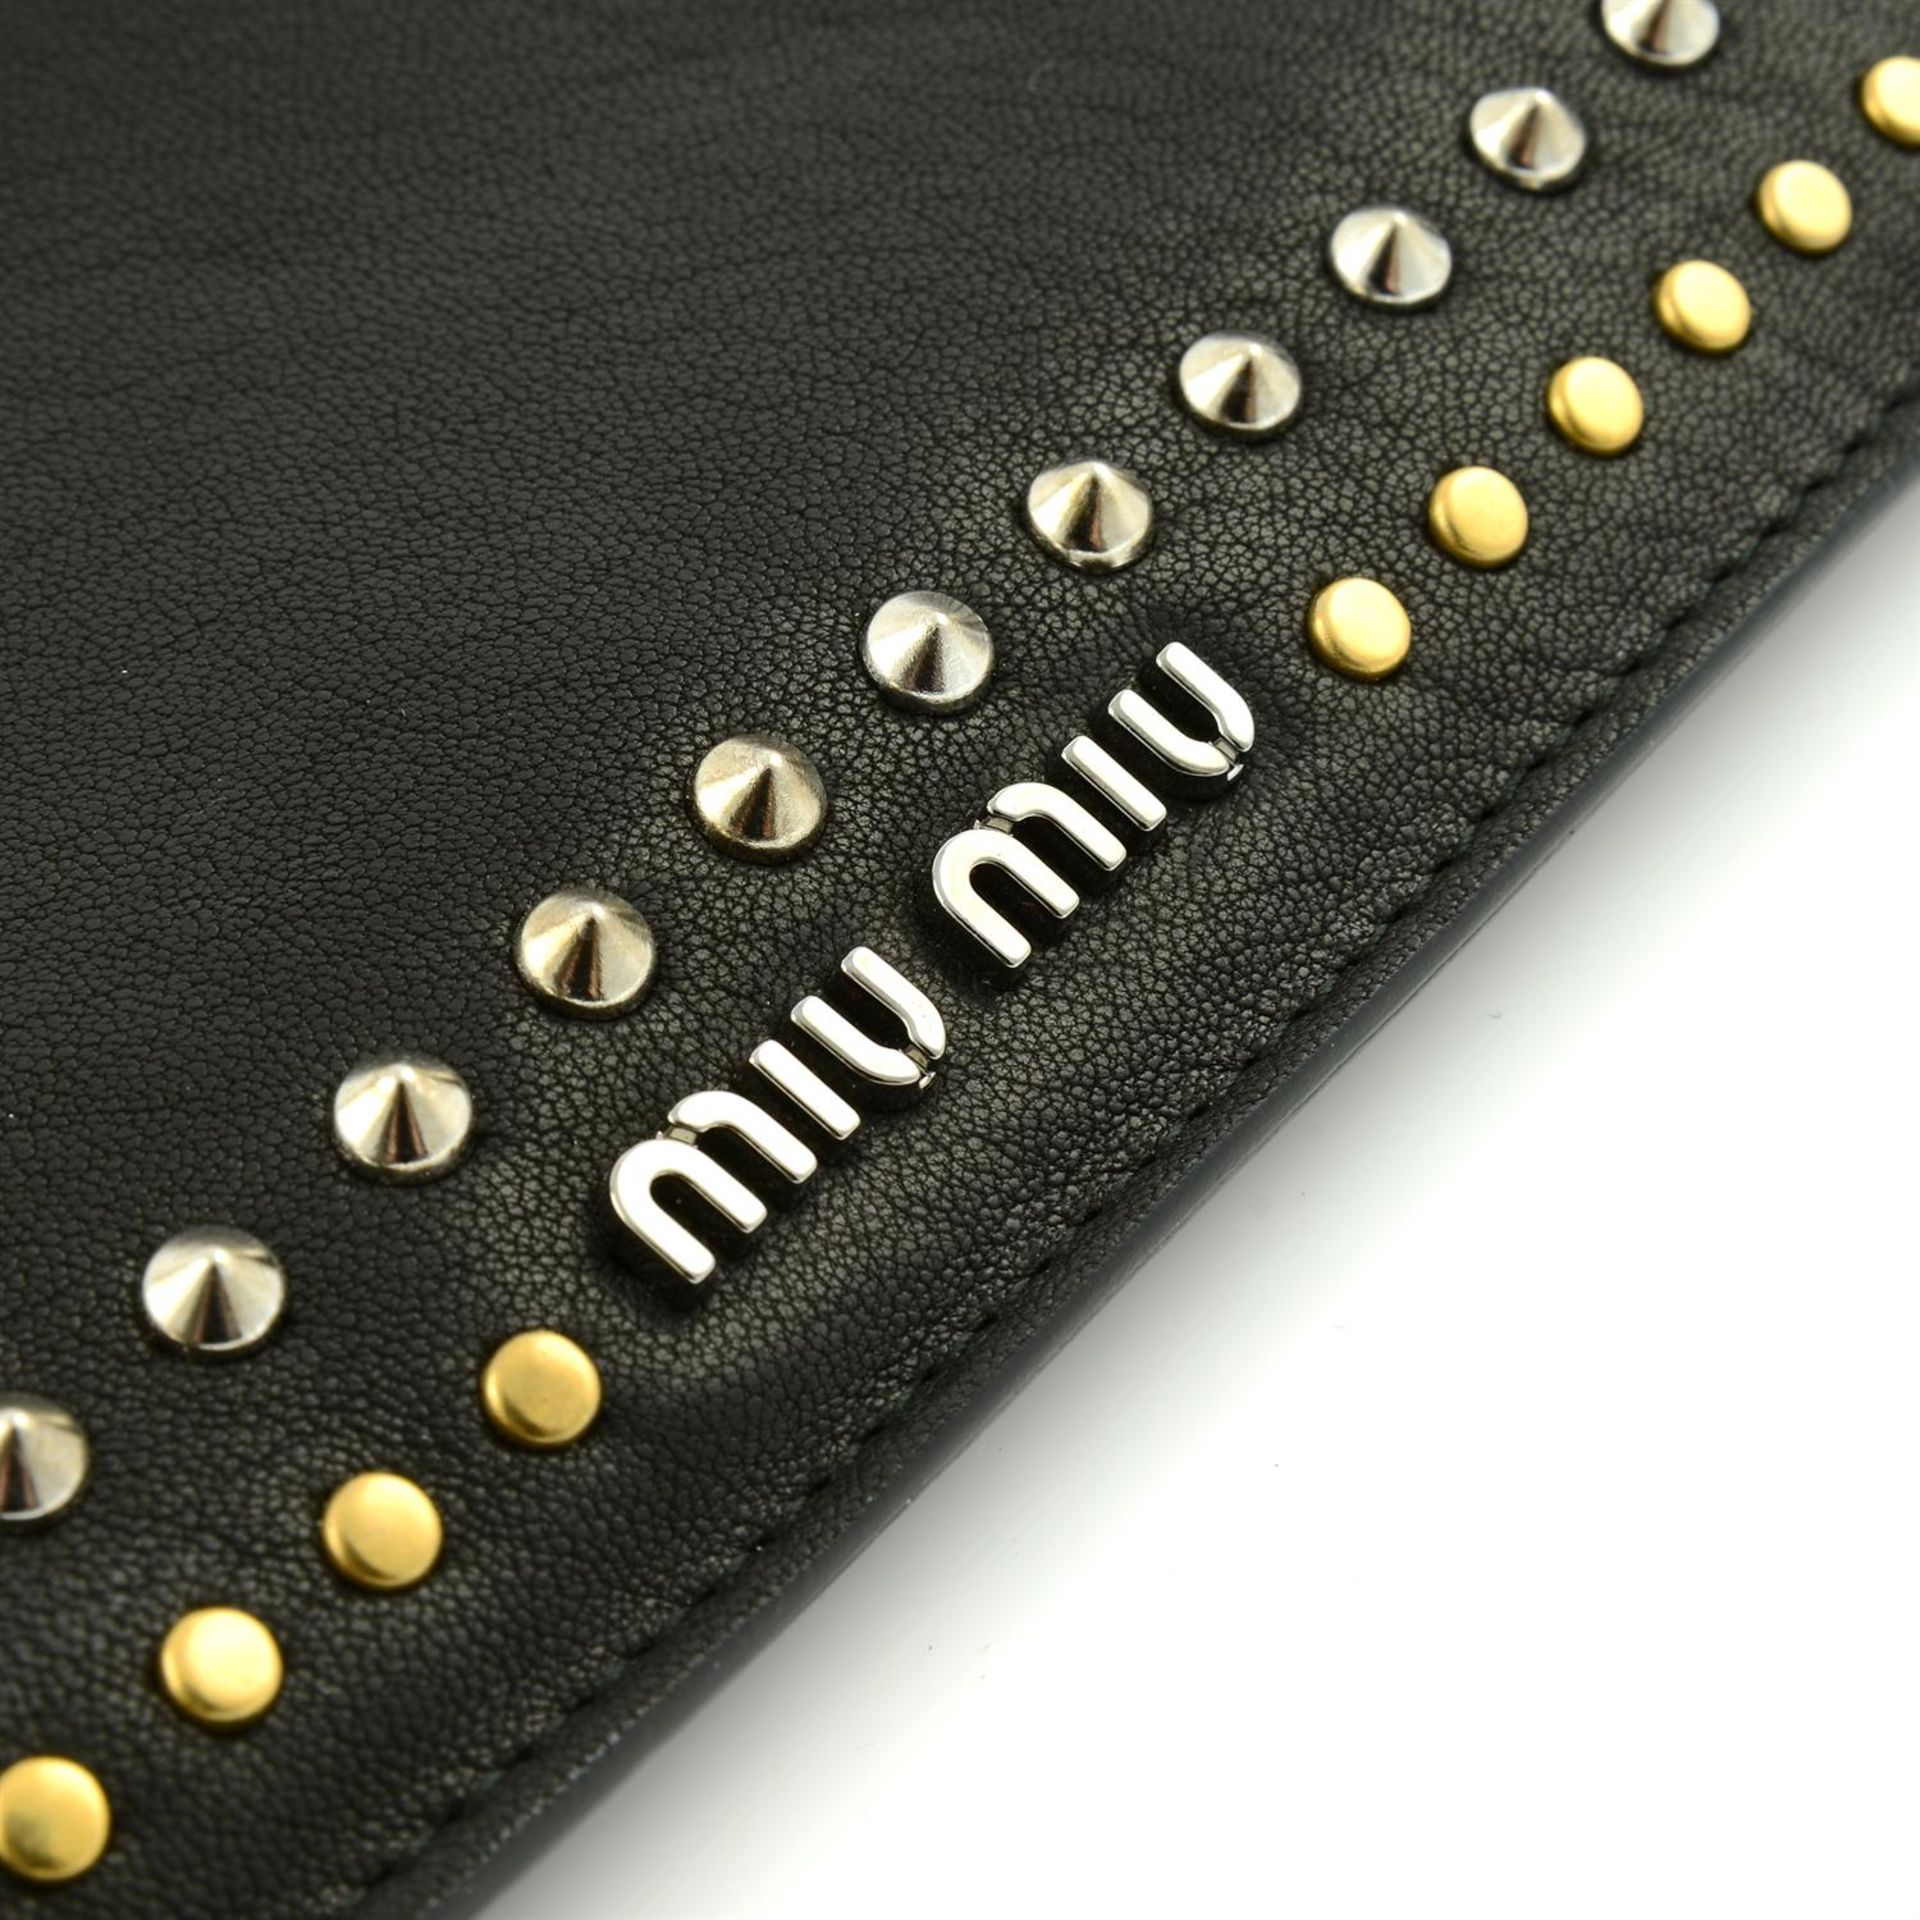 MIU MIU -a black leather iPad case. - Image 3 of 3